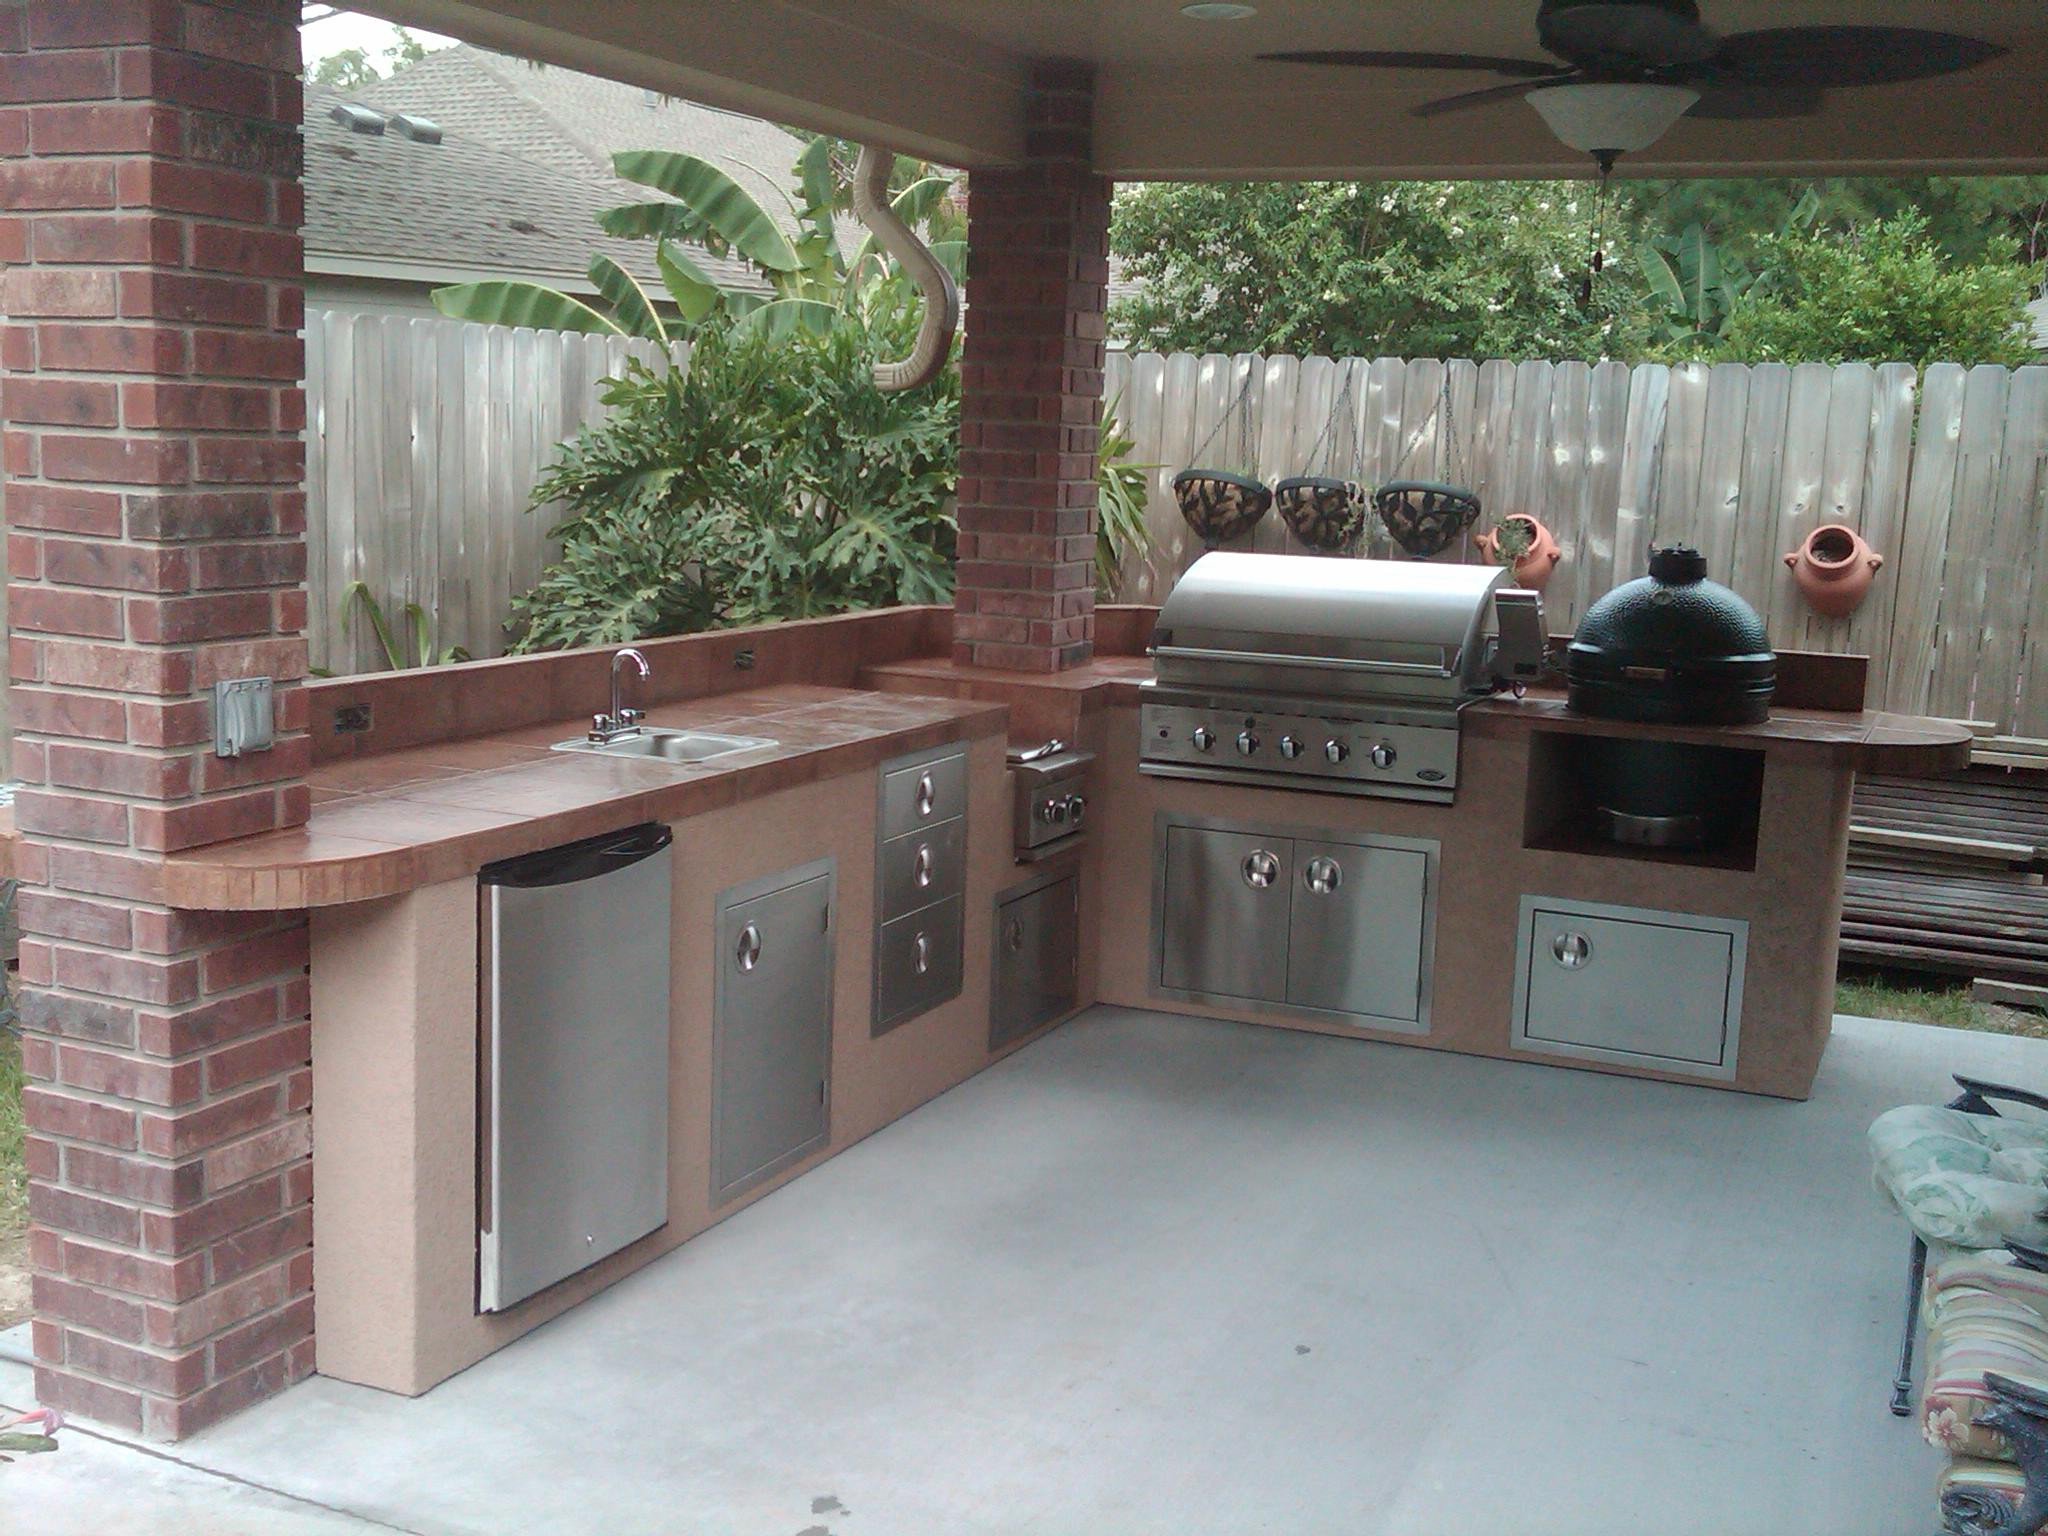 Grill For Outdoor Kitchen
 Outdoor Kitchen Equipment Houston Outdoor Kitchen Gas